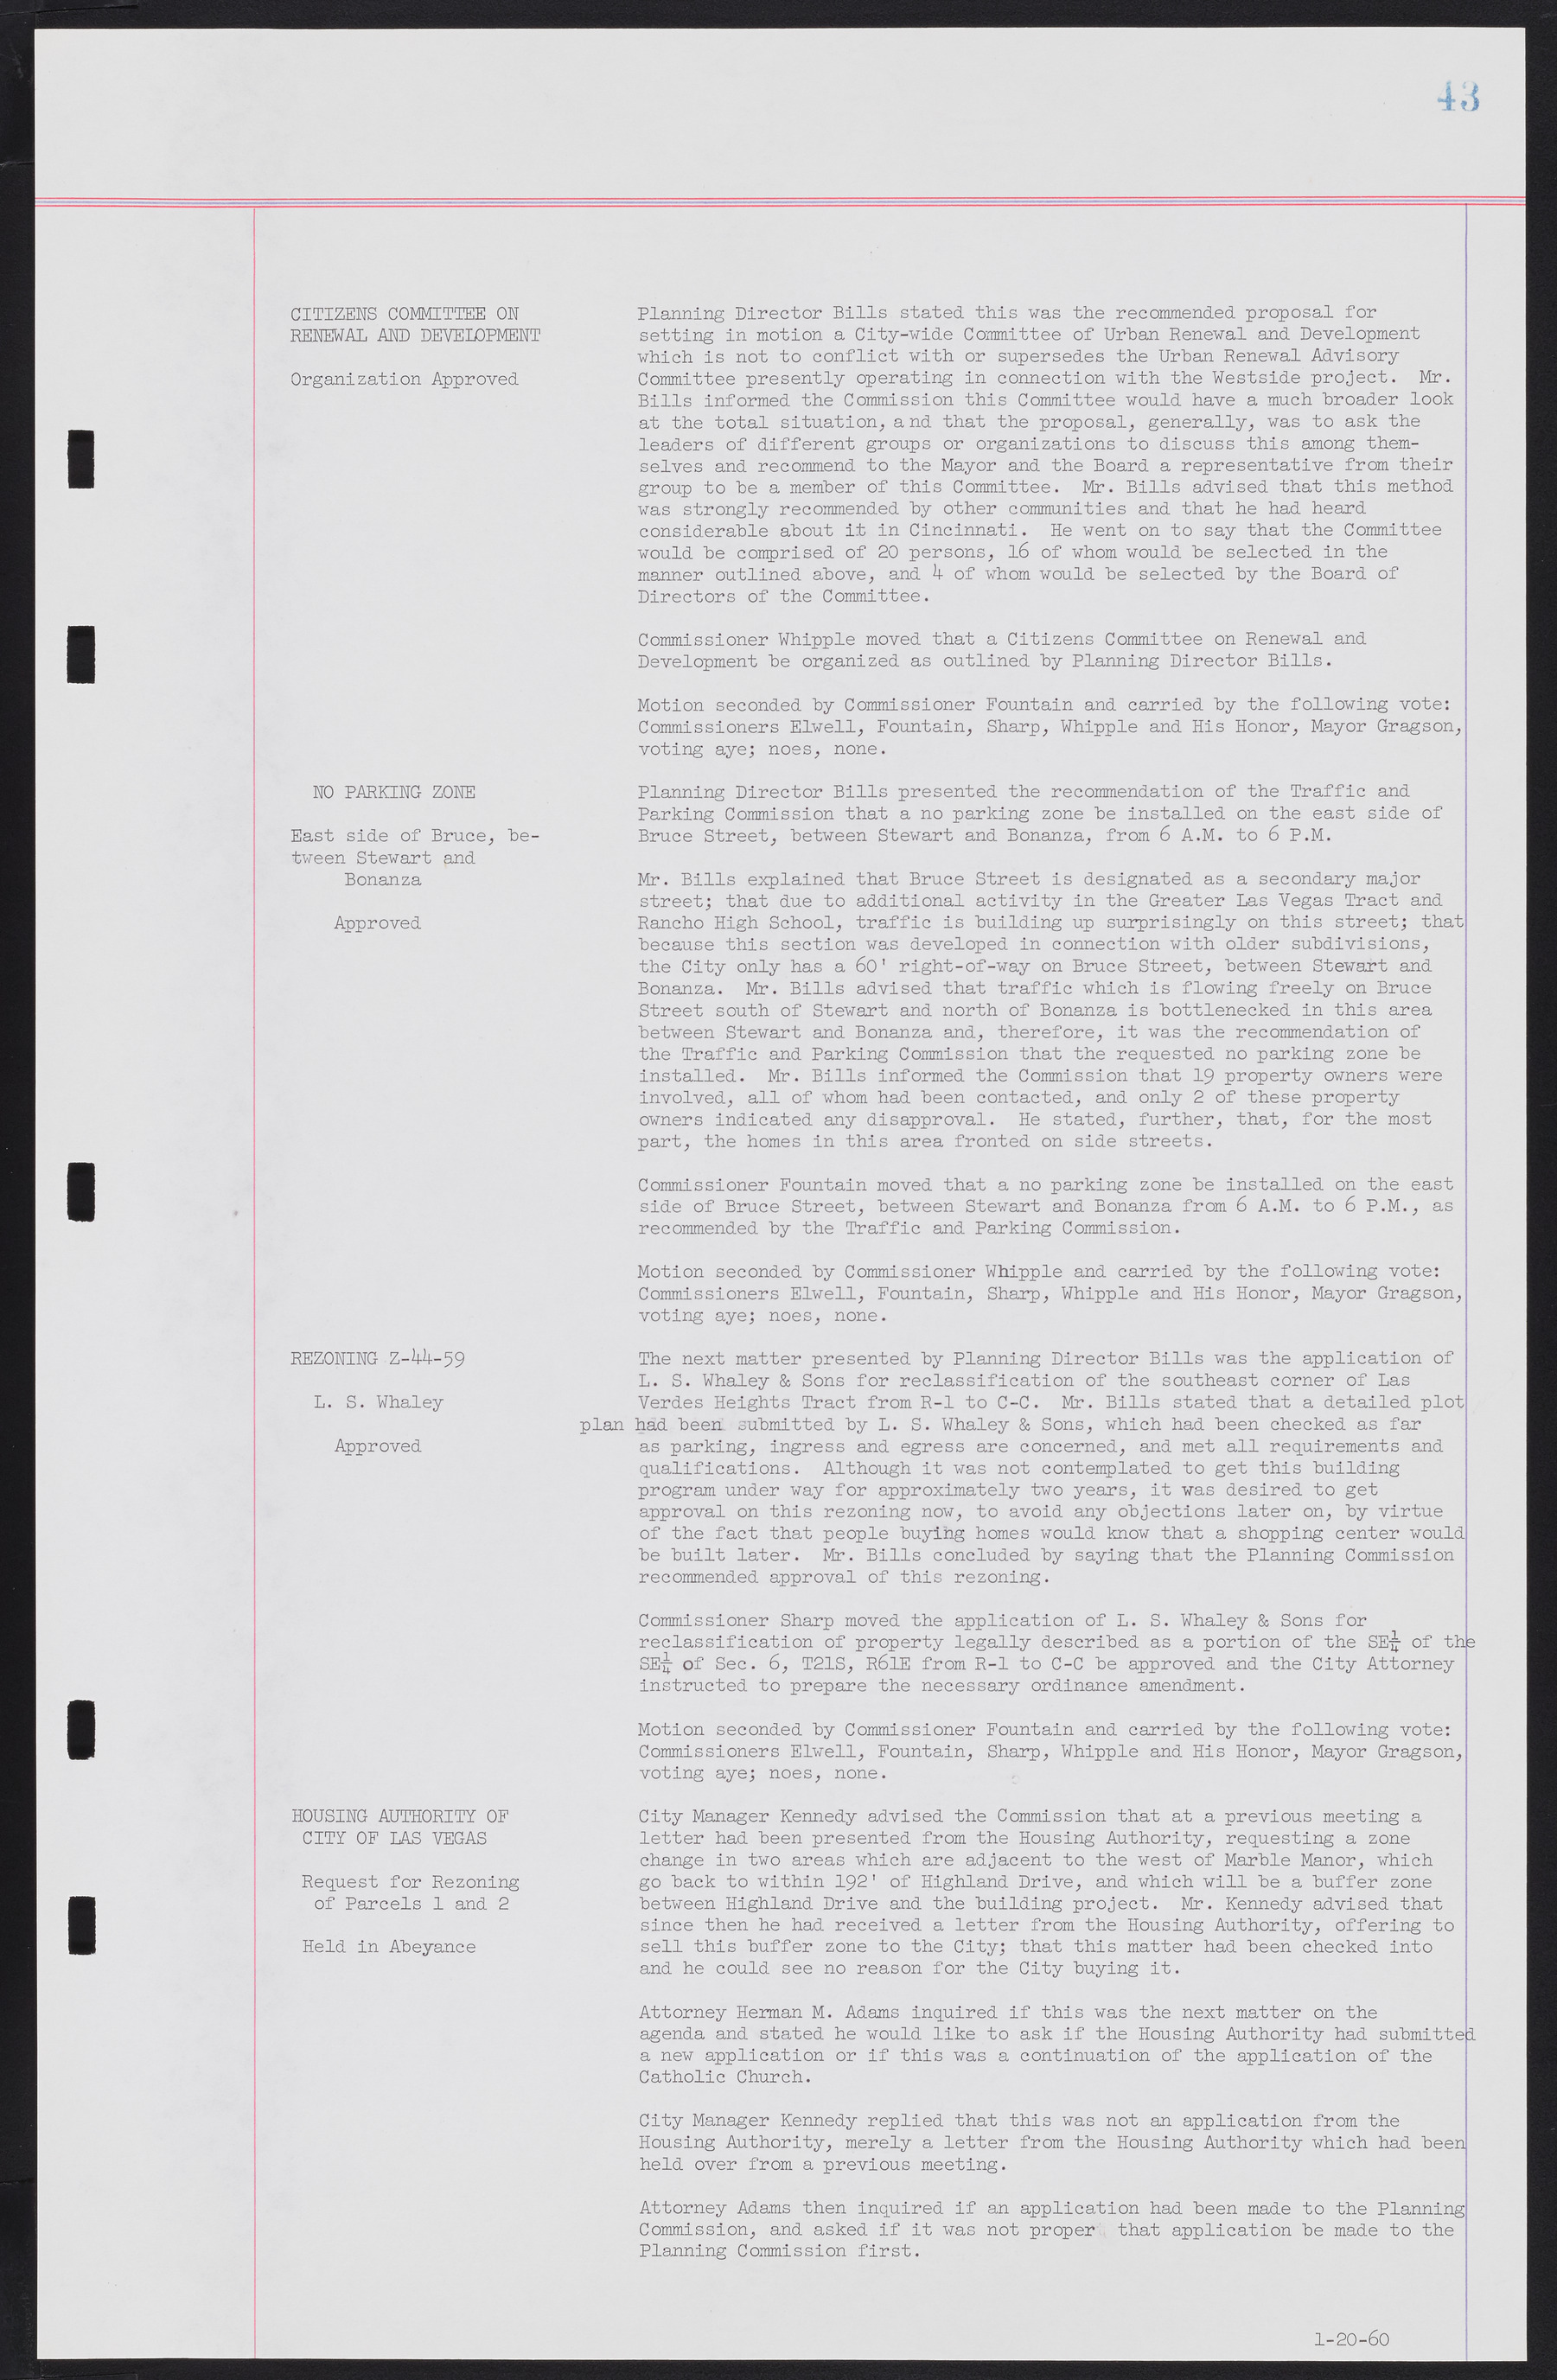 Las Vegas City Commission Minutes, December 8, 1959 to February 17, 1960, lvc000012-47